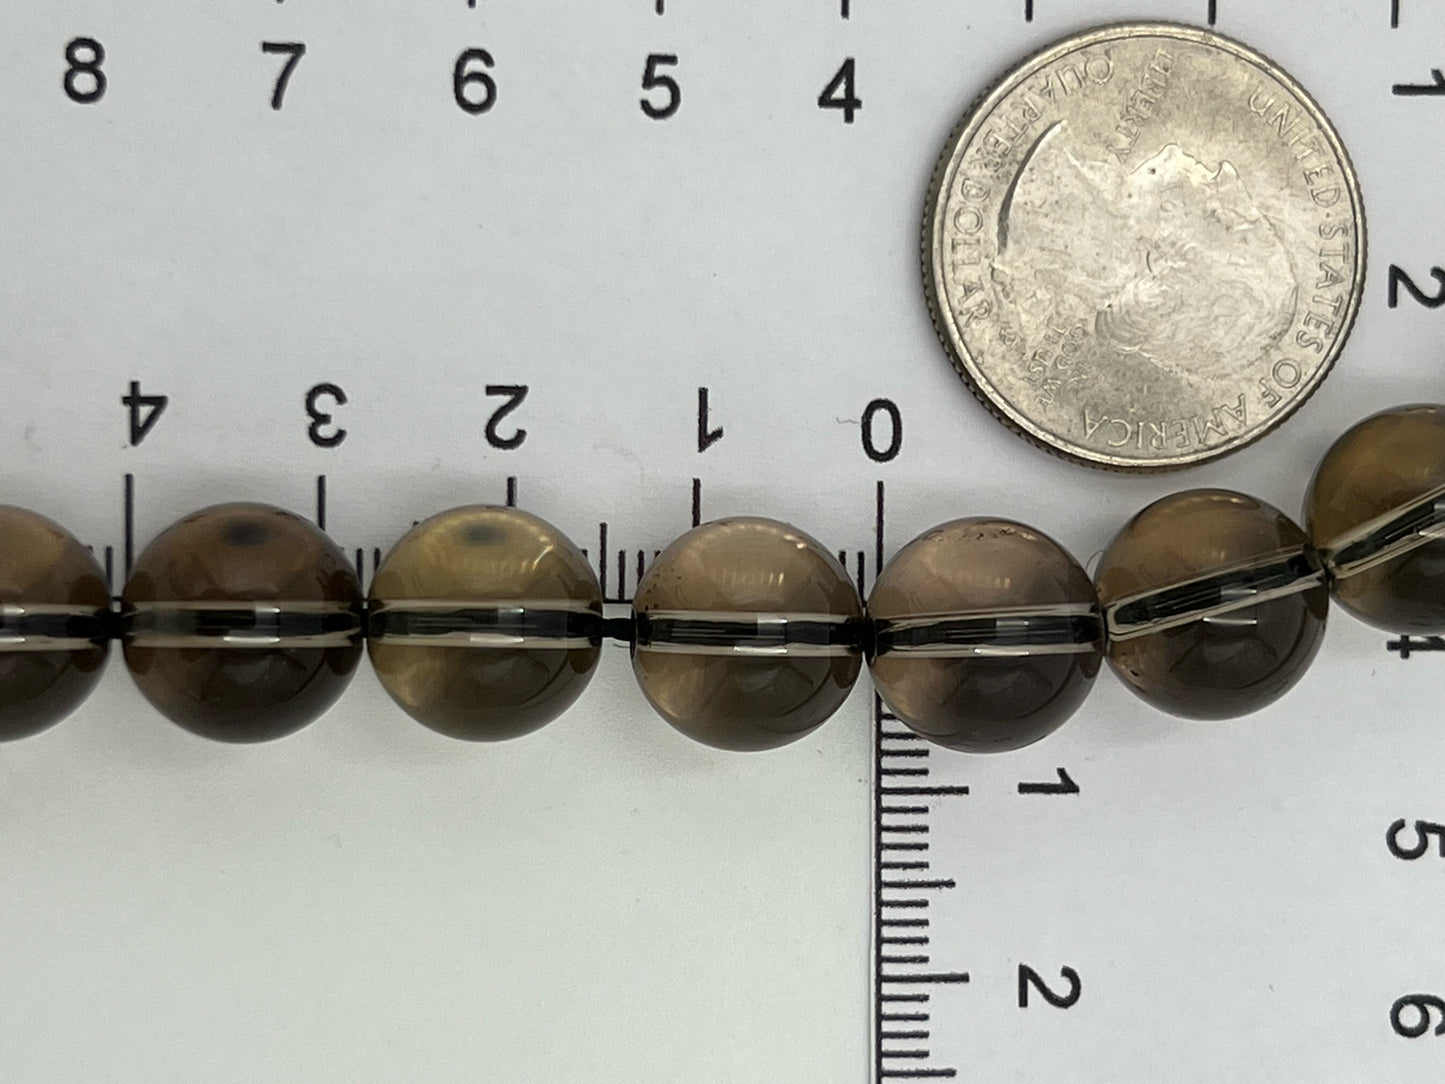 Smokey Quartz Beads 12mm 1 strand (40cm)